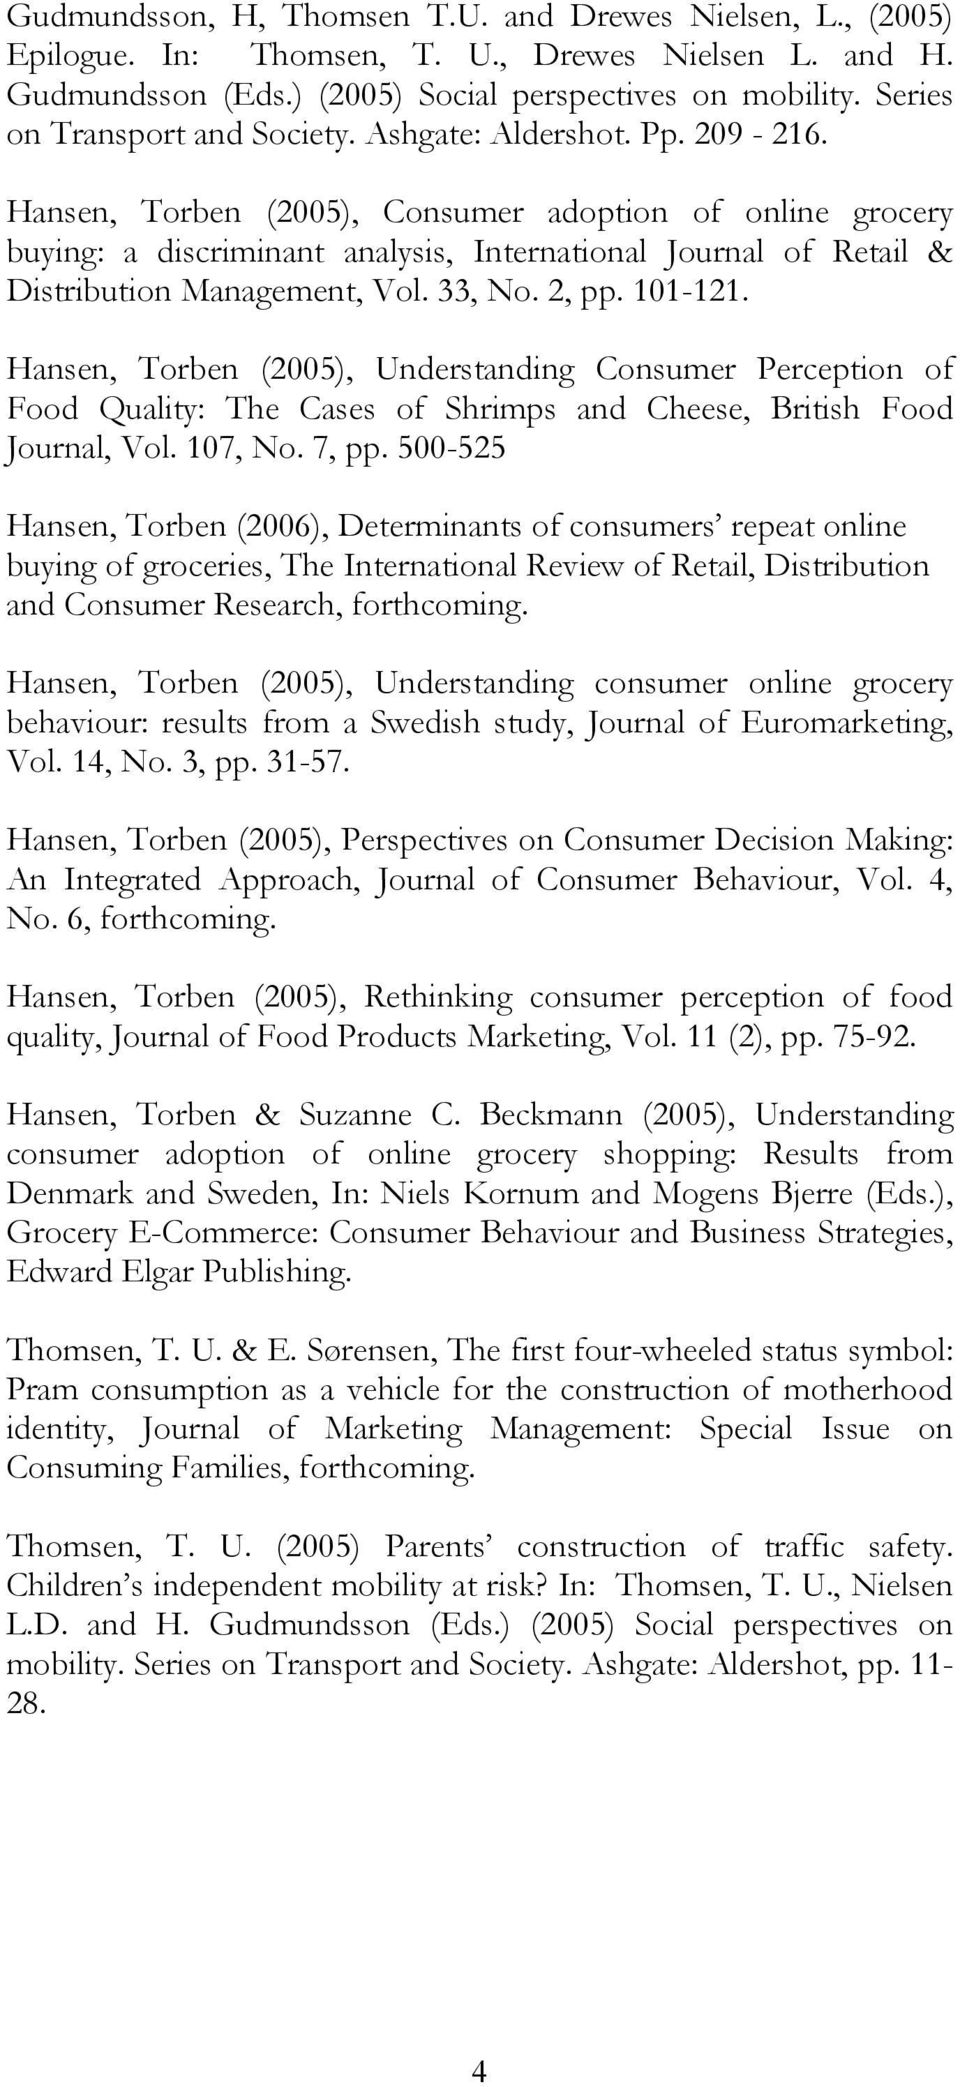 Hansen, Torben (2005), Consumer adoption of online grocery buying: a discriminant analysis, International Journal of Retail & Distribution Management, Vol. 33, No. 2, pp. 101-121.